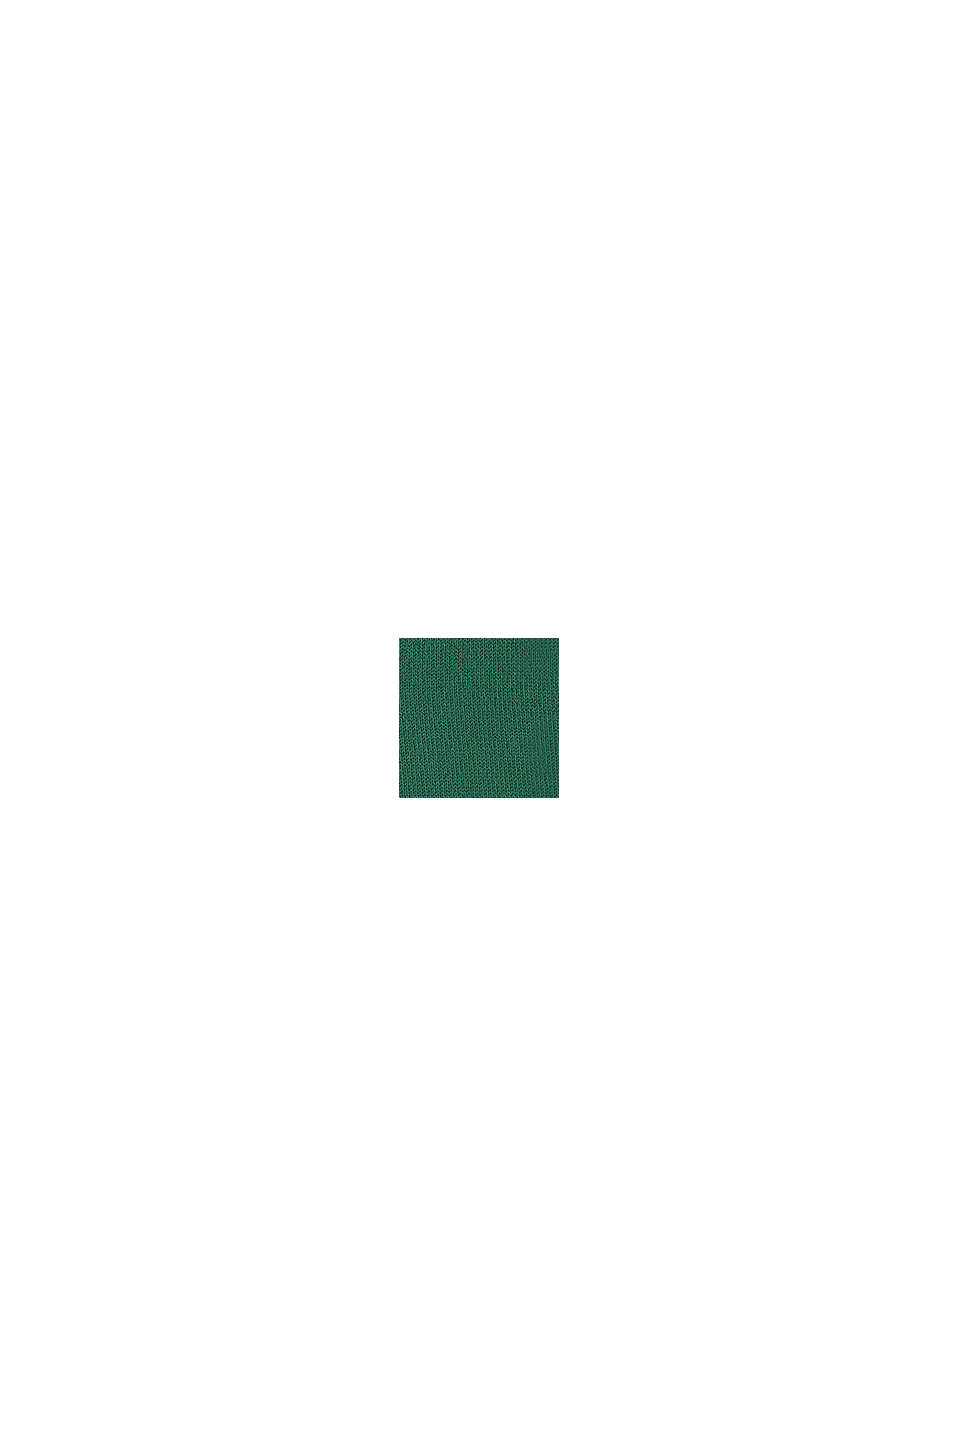 Pull-over color block en coton, BOTTLE GREEN, swatch